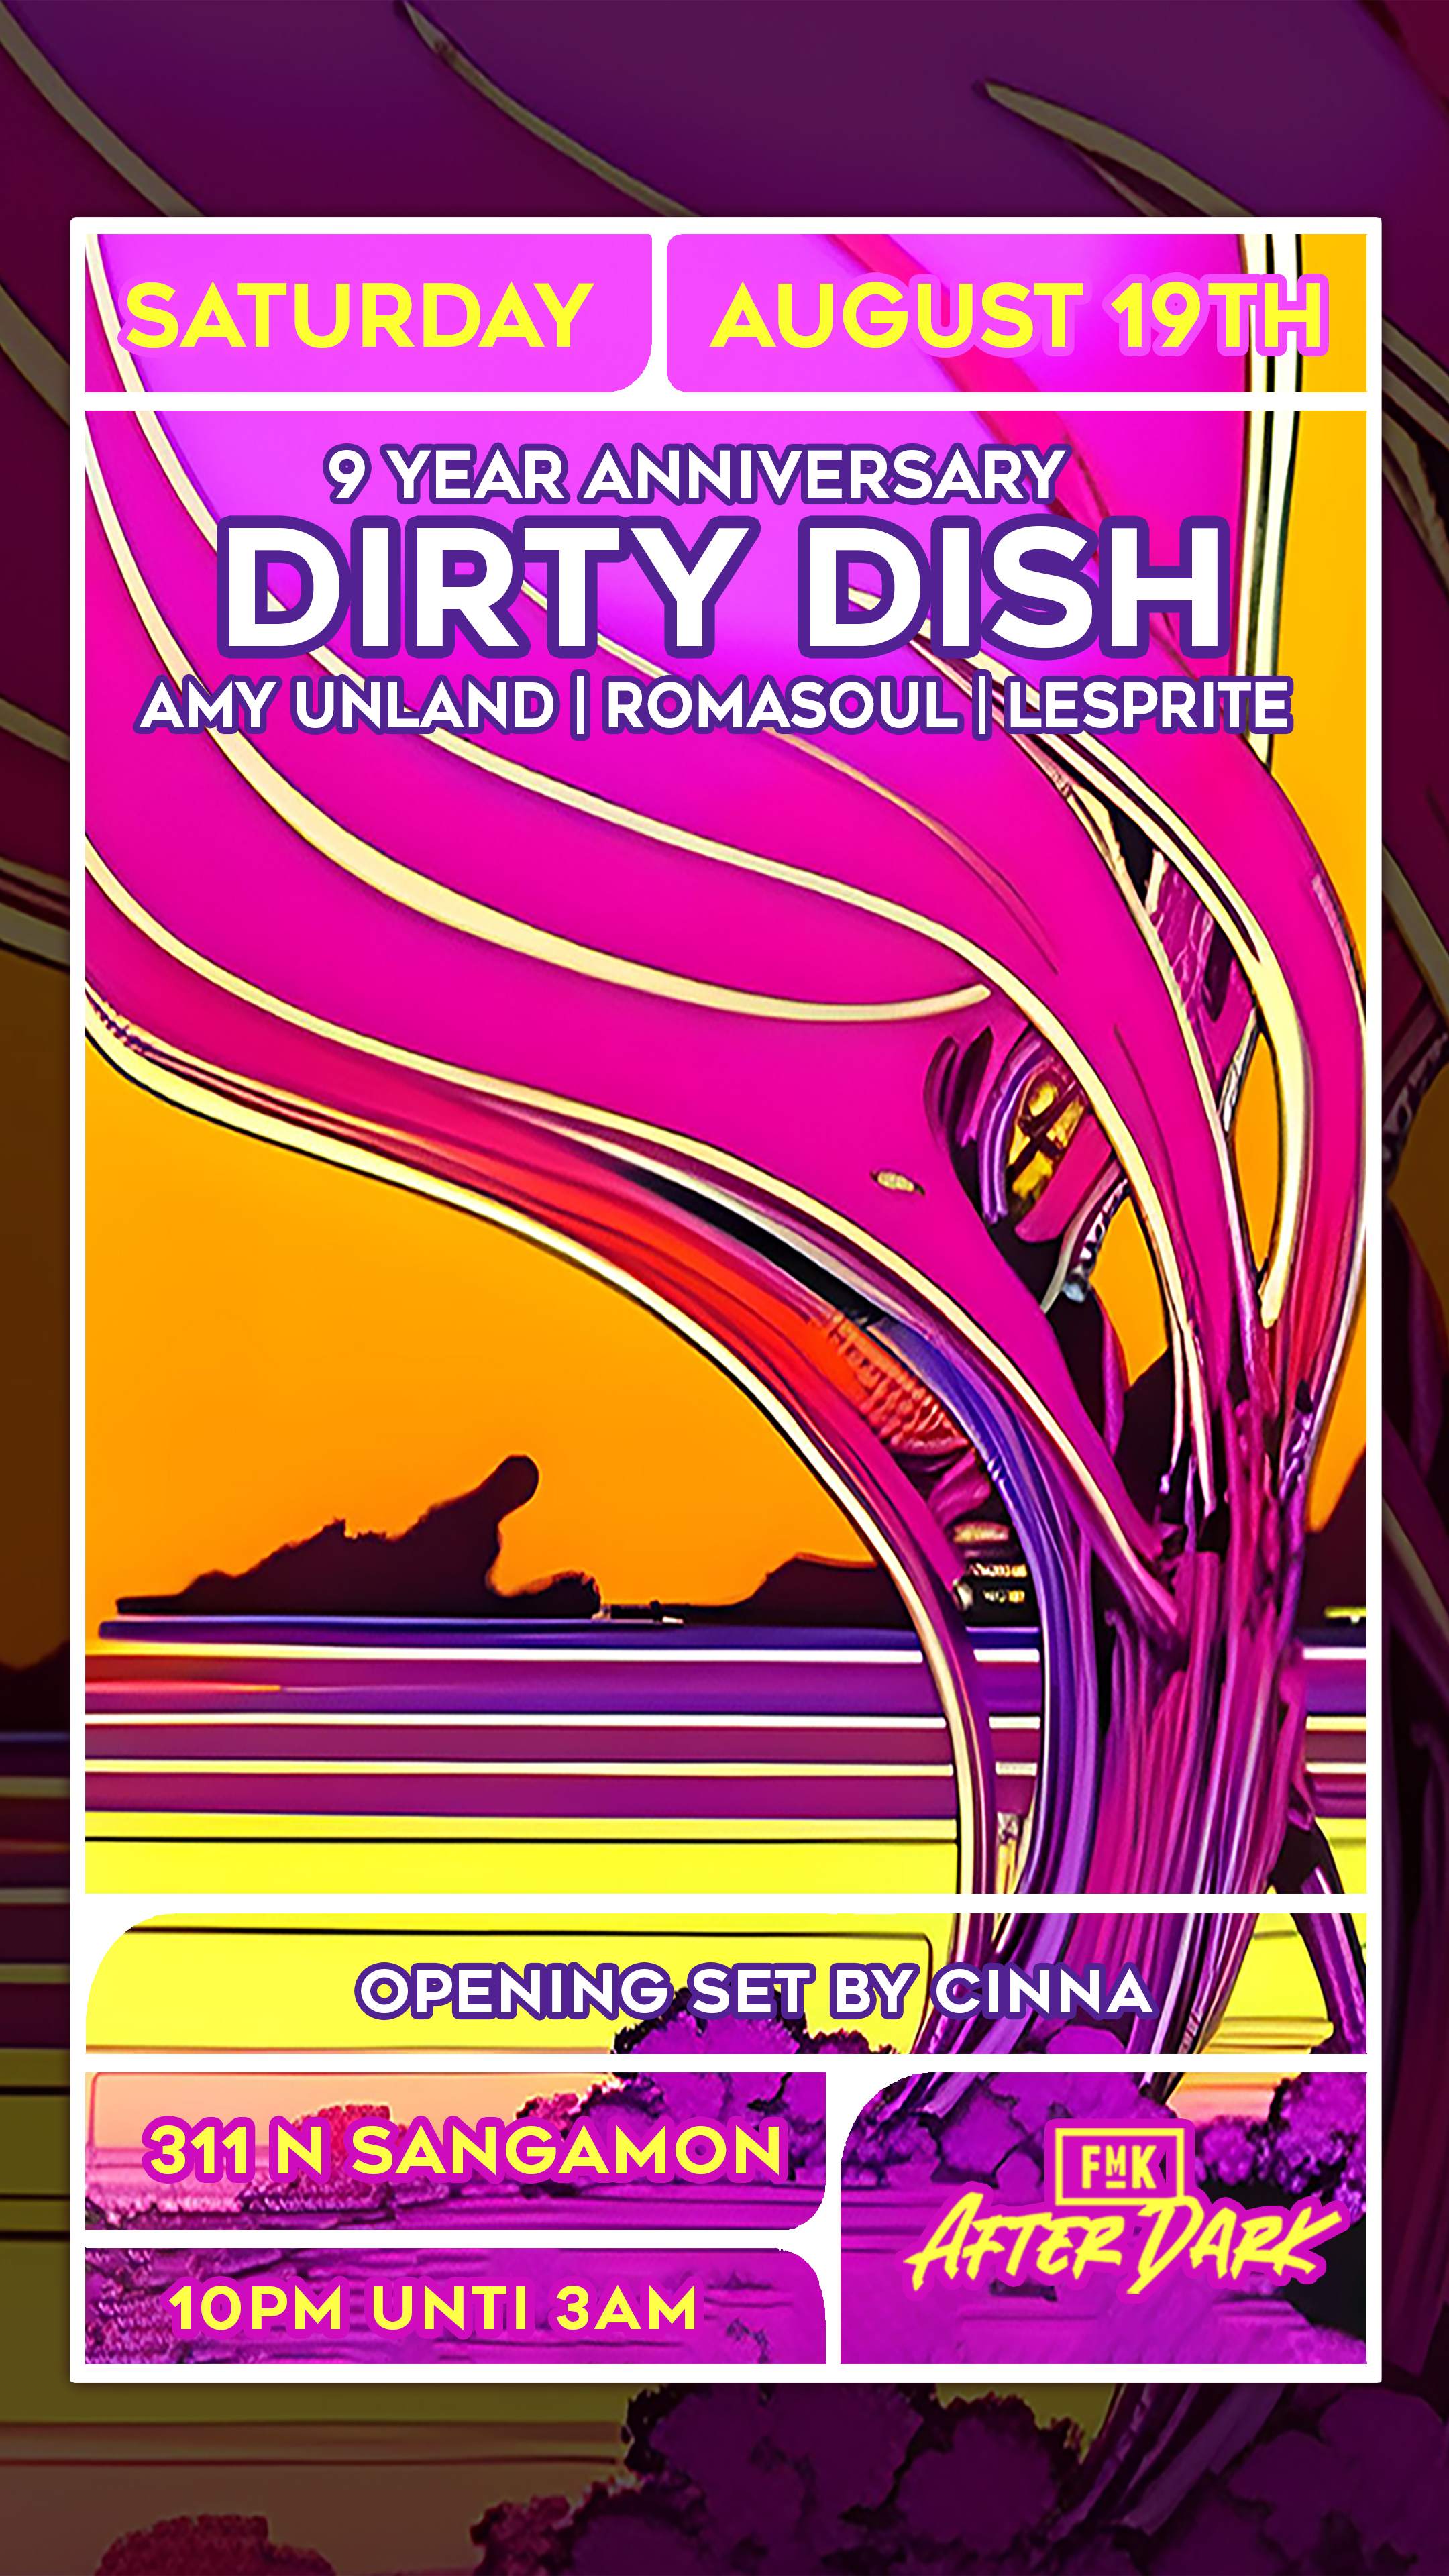 Dirty Dish 9YR Anniversary at FMK AFTER DARK - Página frontal